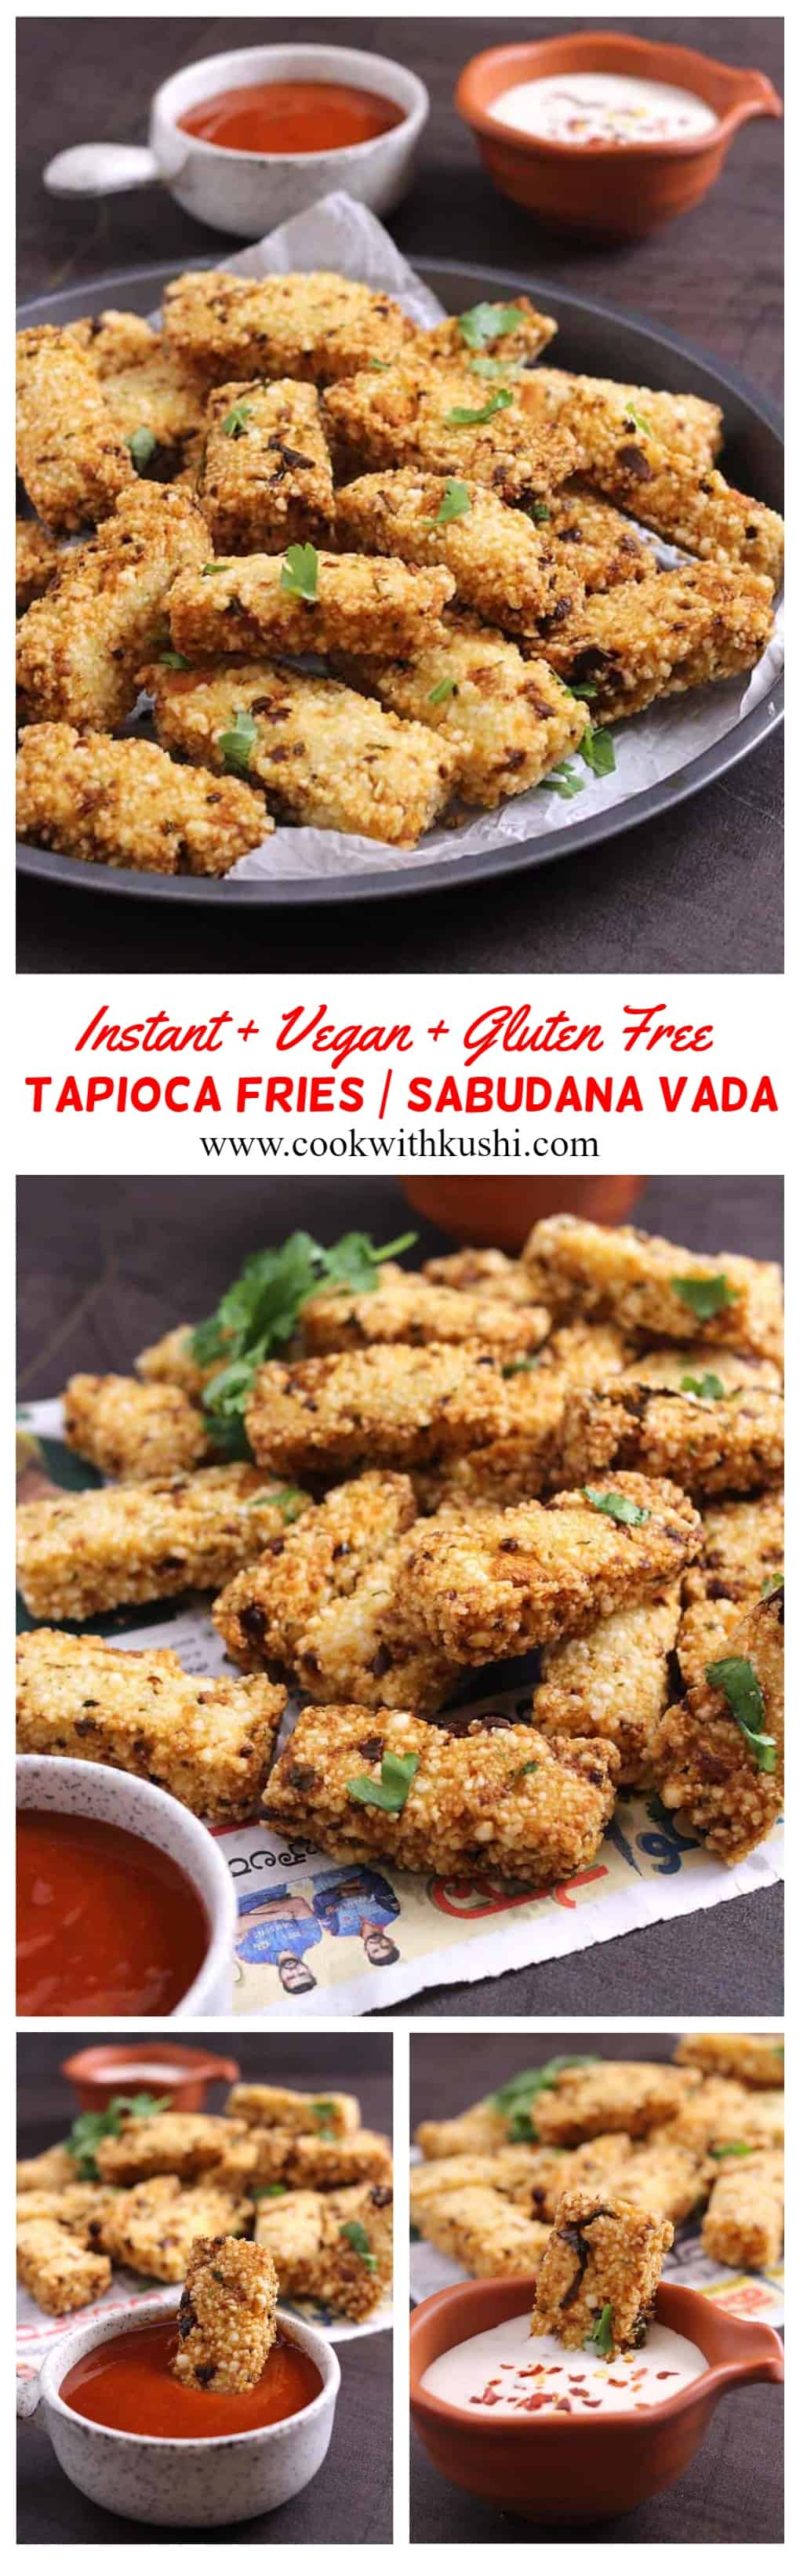 Sabudana Fries or Instant Sabudana Vada are irresistibly delicious and addictive snack or finger food crispy on the outside, chewy and melt in mouth texture inside. I bet you just can’t stop having one. #sabudana #sago #tapiocapearls #crispytapioca #sagovada #sabudanavada #indianrecipes #indiansnacks #fastingfood #upvasfood #vratkakhana #instantvada #sabudanafries